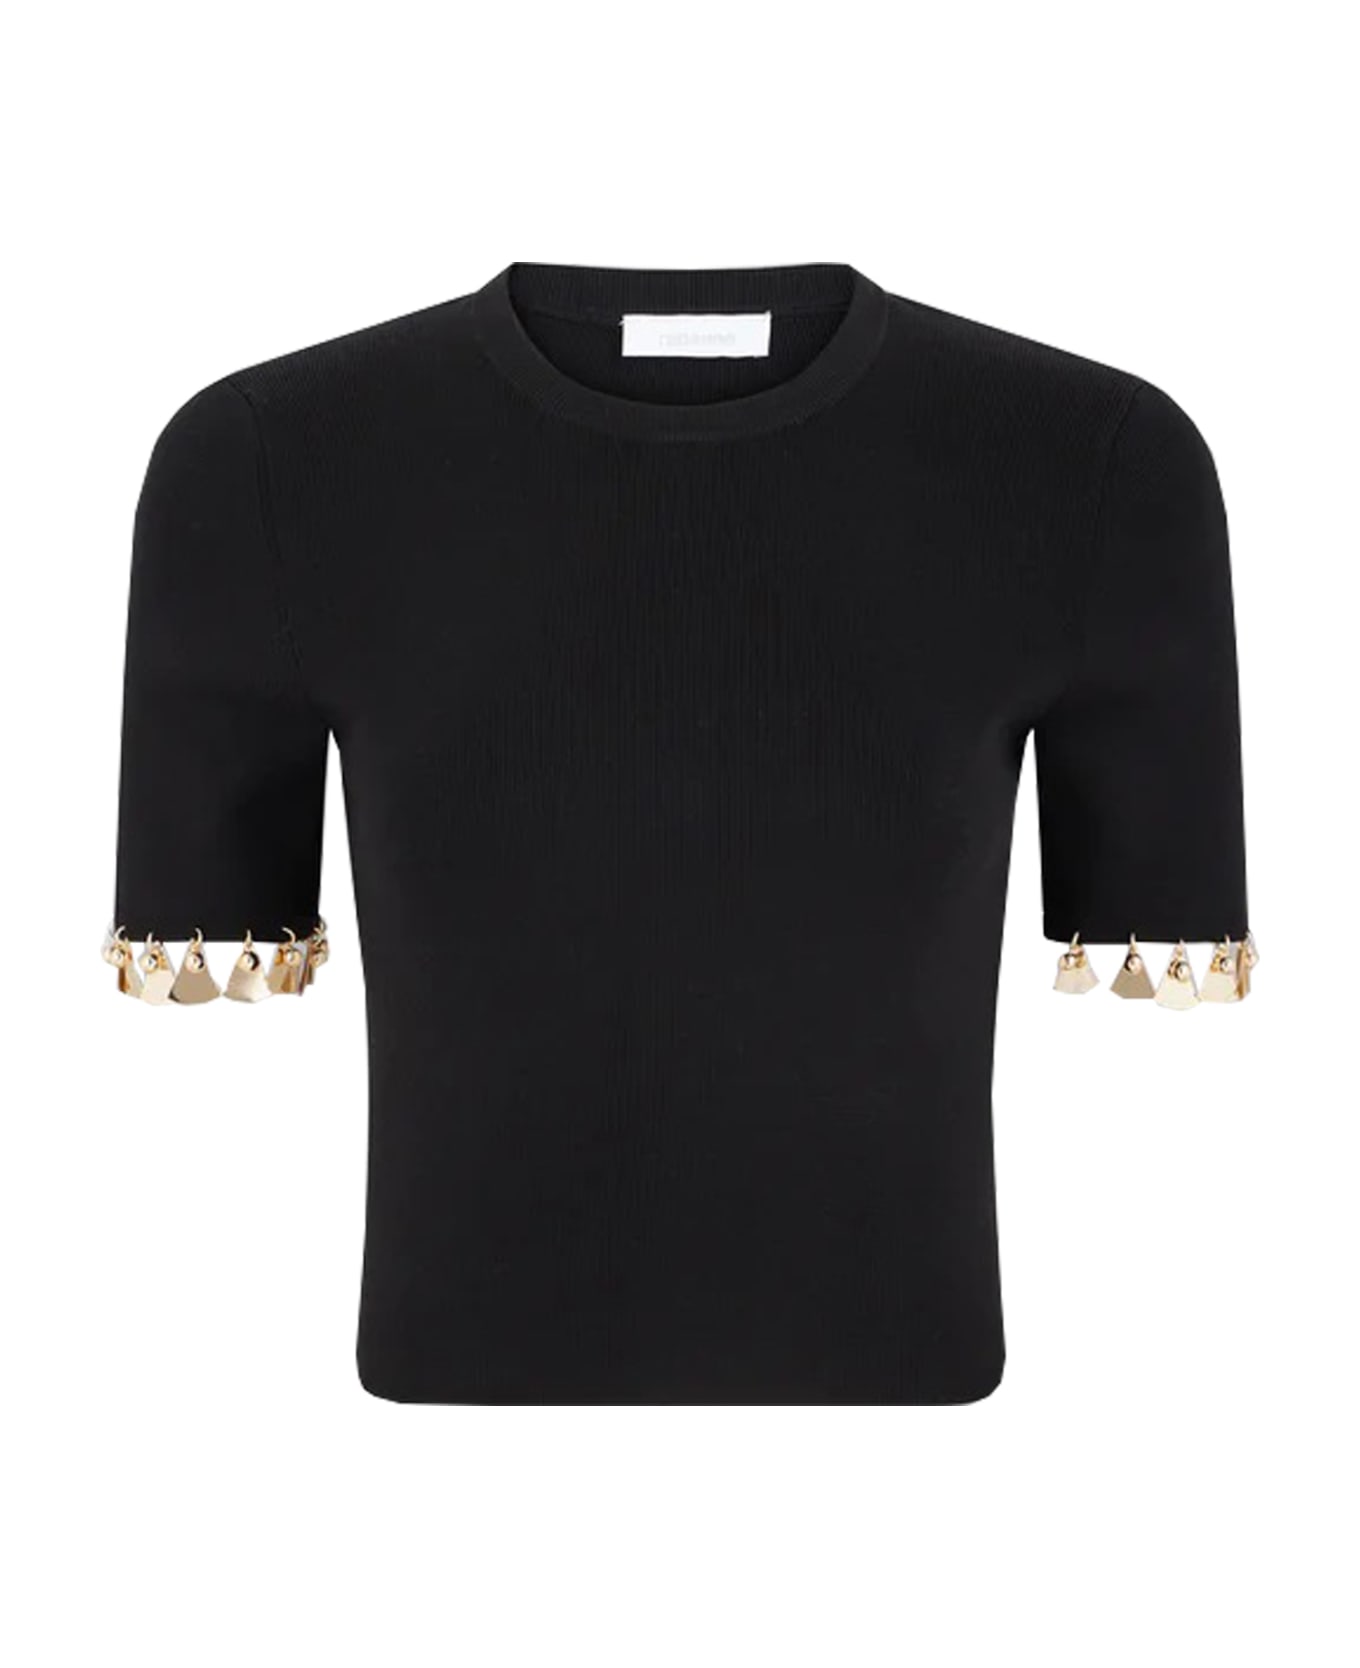 Paco Rabanne Embellished Knit Cropped Top - Black